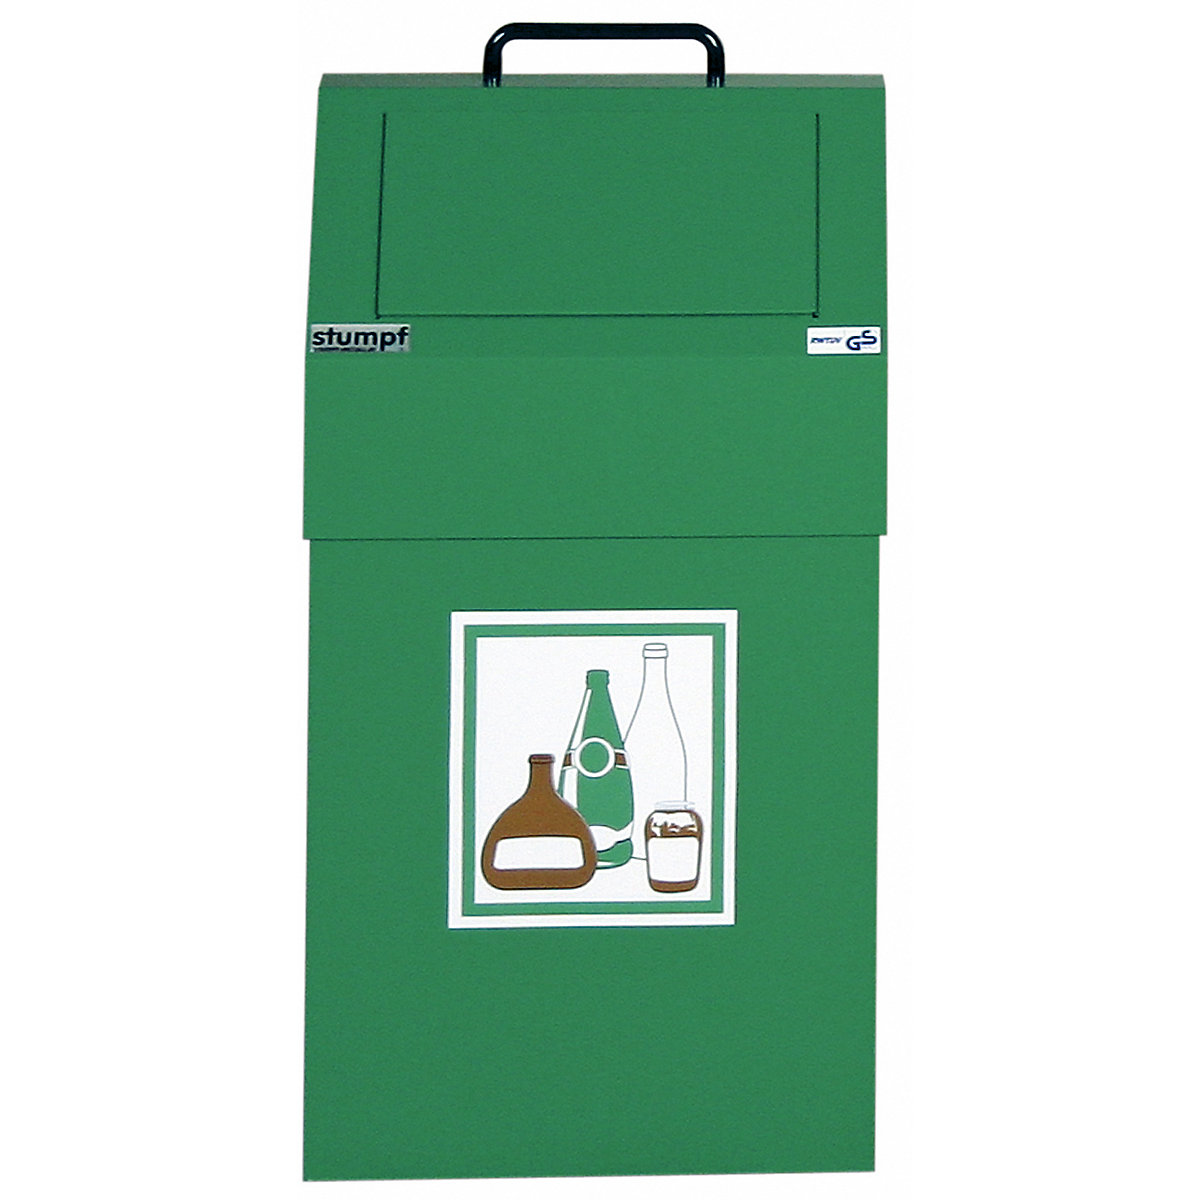 Wertstoffbehälter, Volumen 45 l, BxHxT 320 x 650 x 310 mm, stationär, Stahlblech, grün RAL 6024